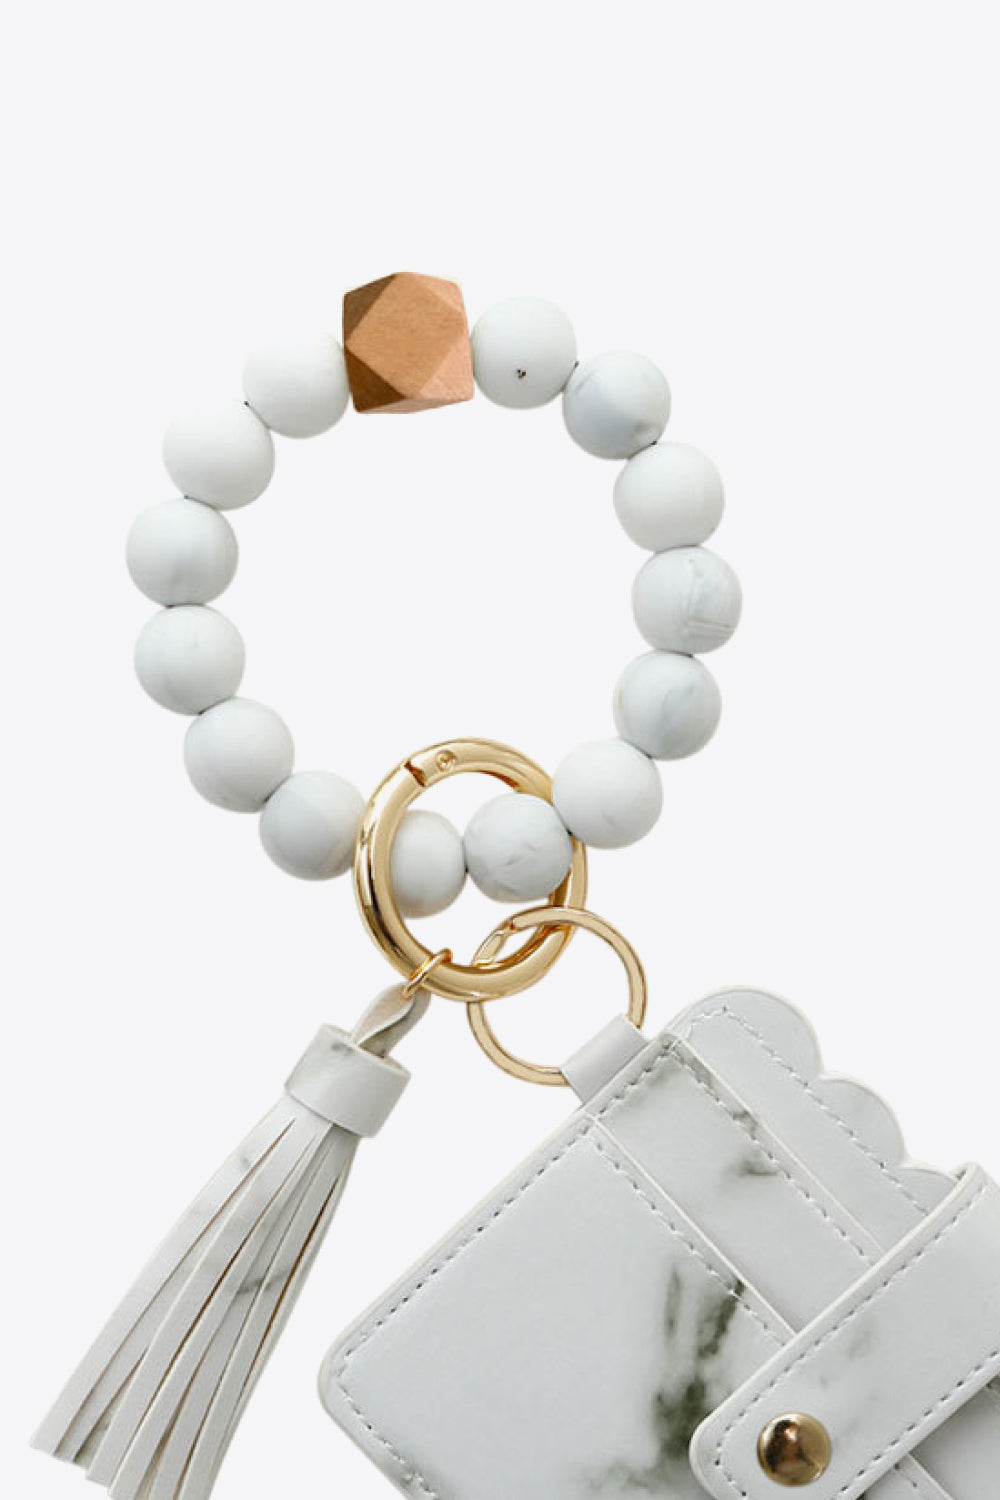 Lavender 2-Pack Mini Purse Tassel Key Chain Sentient Beauty Fashions *Accessories